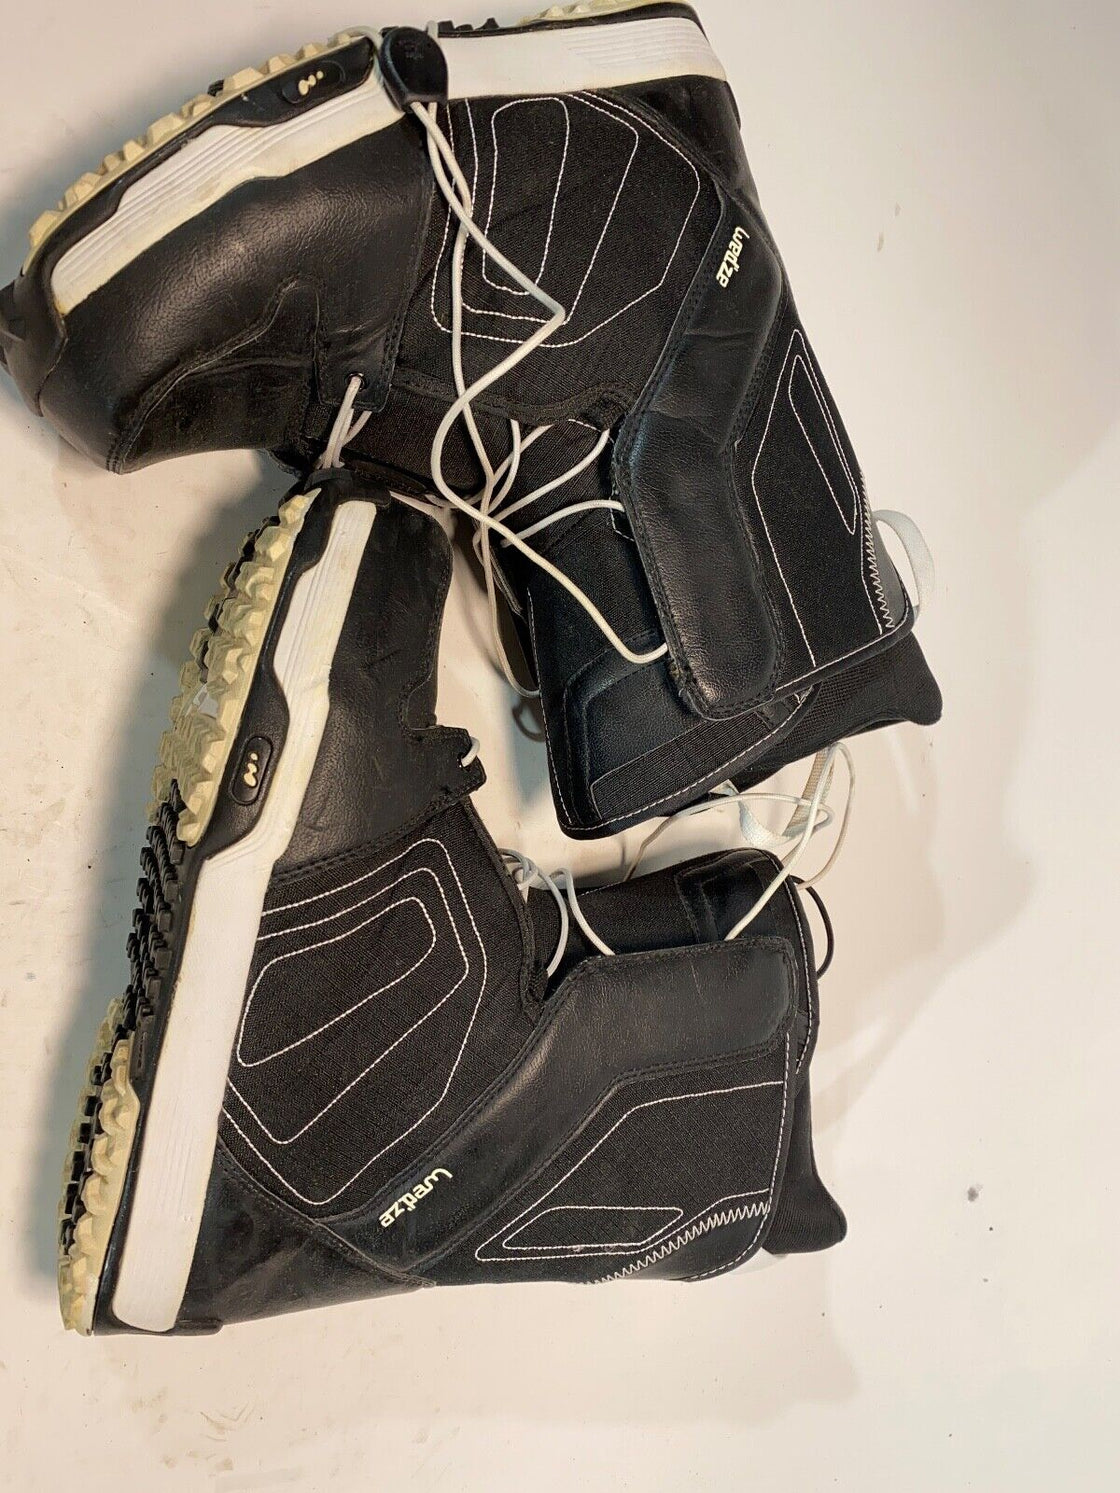 WEDZE Snowboard Boots Size EU42  US8.5  UK8  Mondo 270 mm